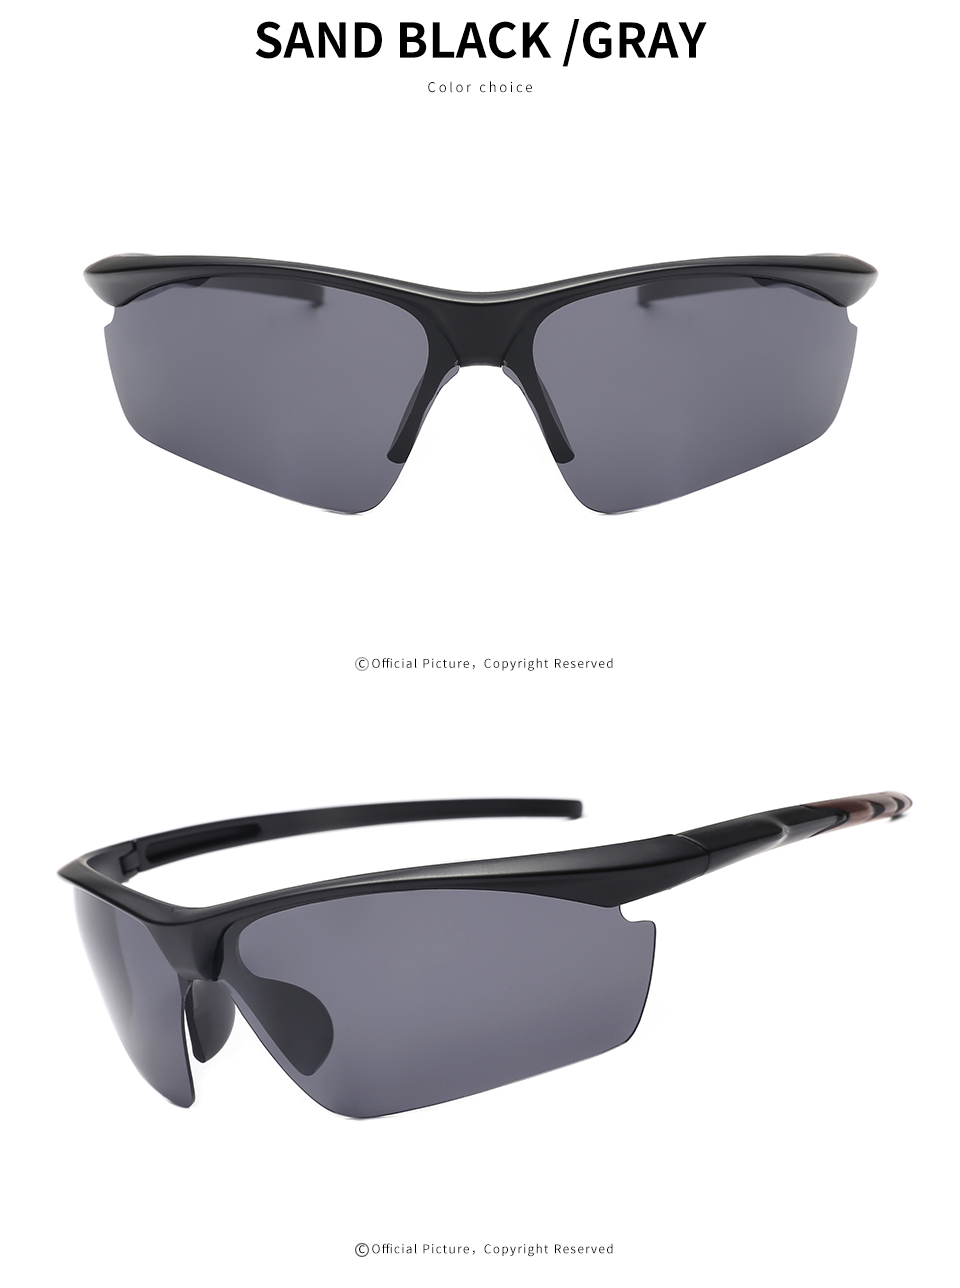 Buy Wholesale Sunglasses, Sunglasses for Motorcycle, Best Polarized Sunglasses for Sports, Polarised Sports Sunglasses